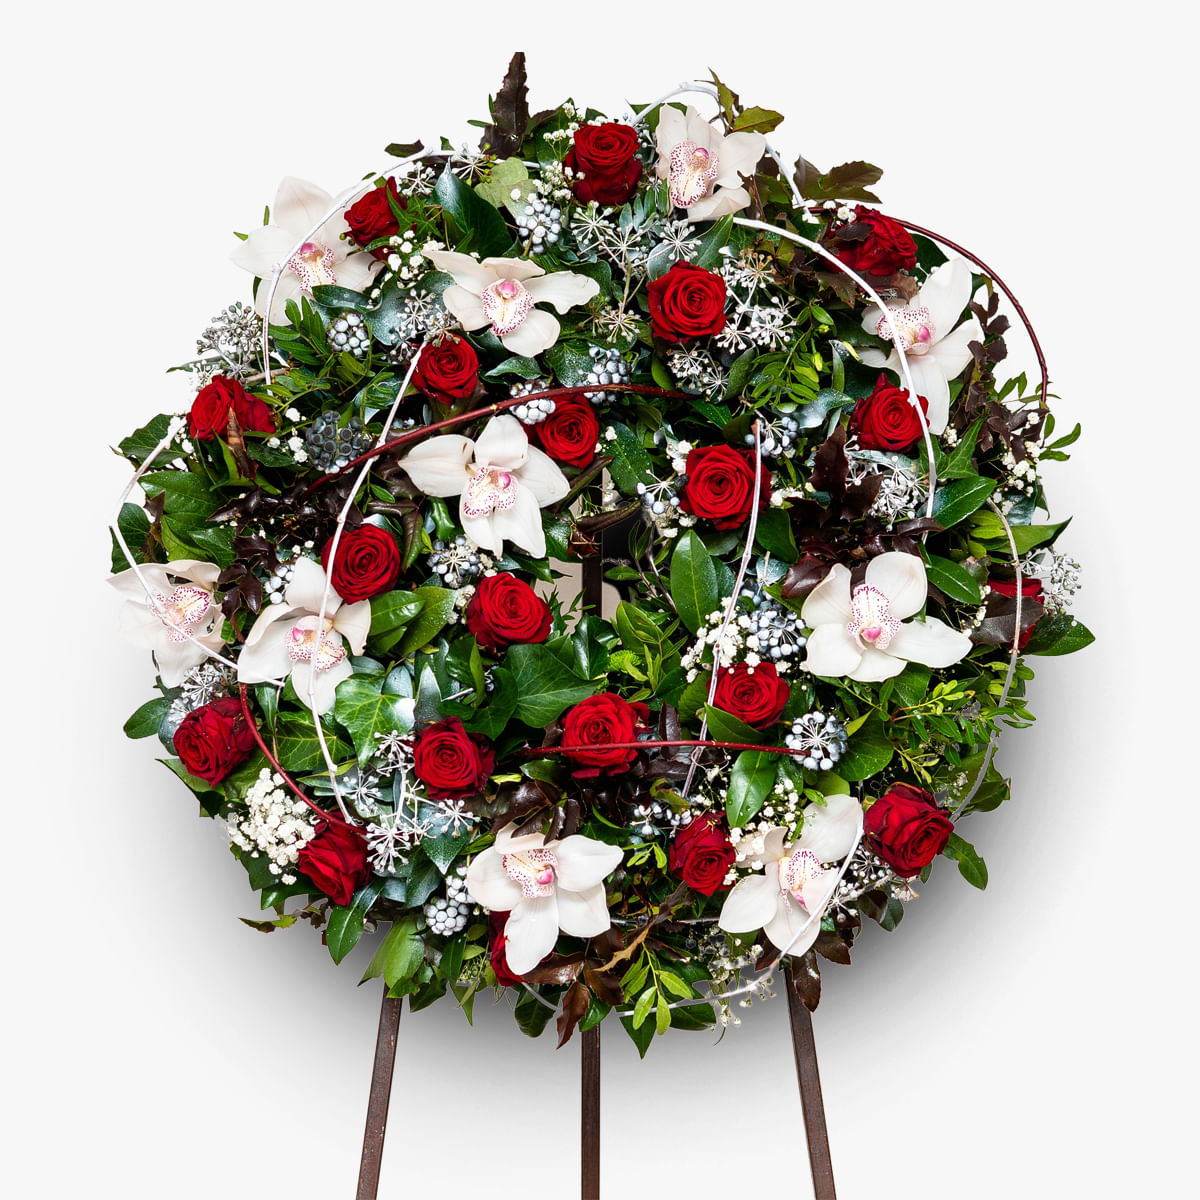 Coroana funerara cu 9 cupe de orhidee cymbidium, 17 trandafiri rosii, 5 wax